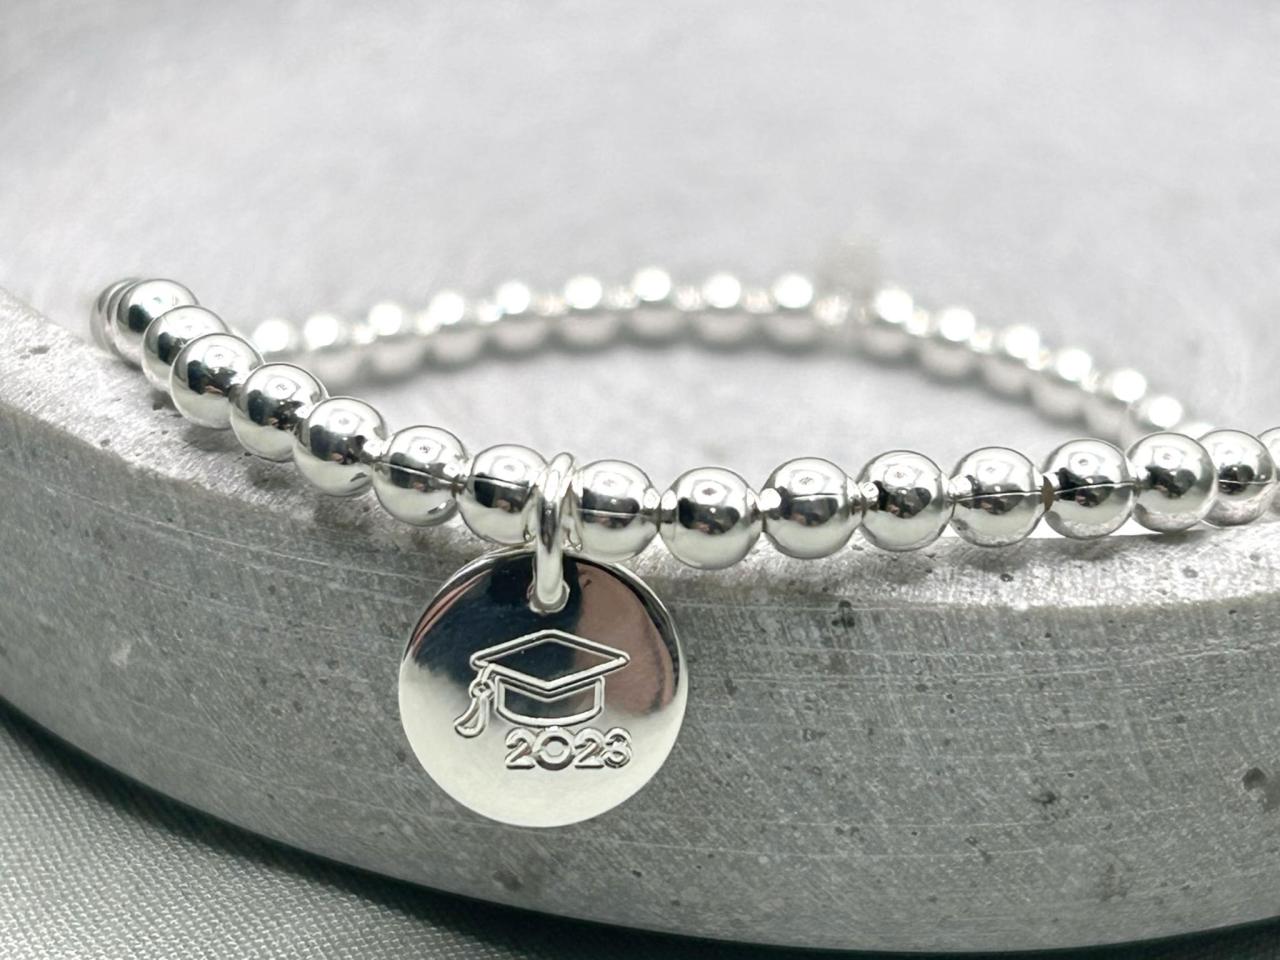 Perlenarmband aus 925er Silberperlen mit rundem Anhänger mit Bachelorhut Gravur als Geschenkidee, Armband Damen